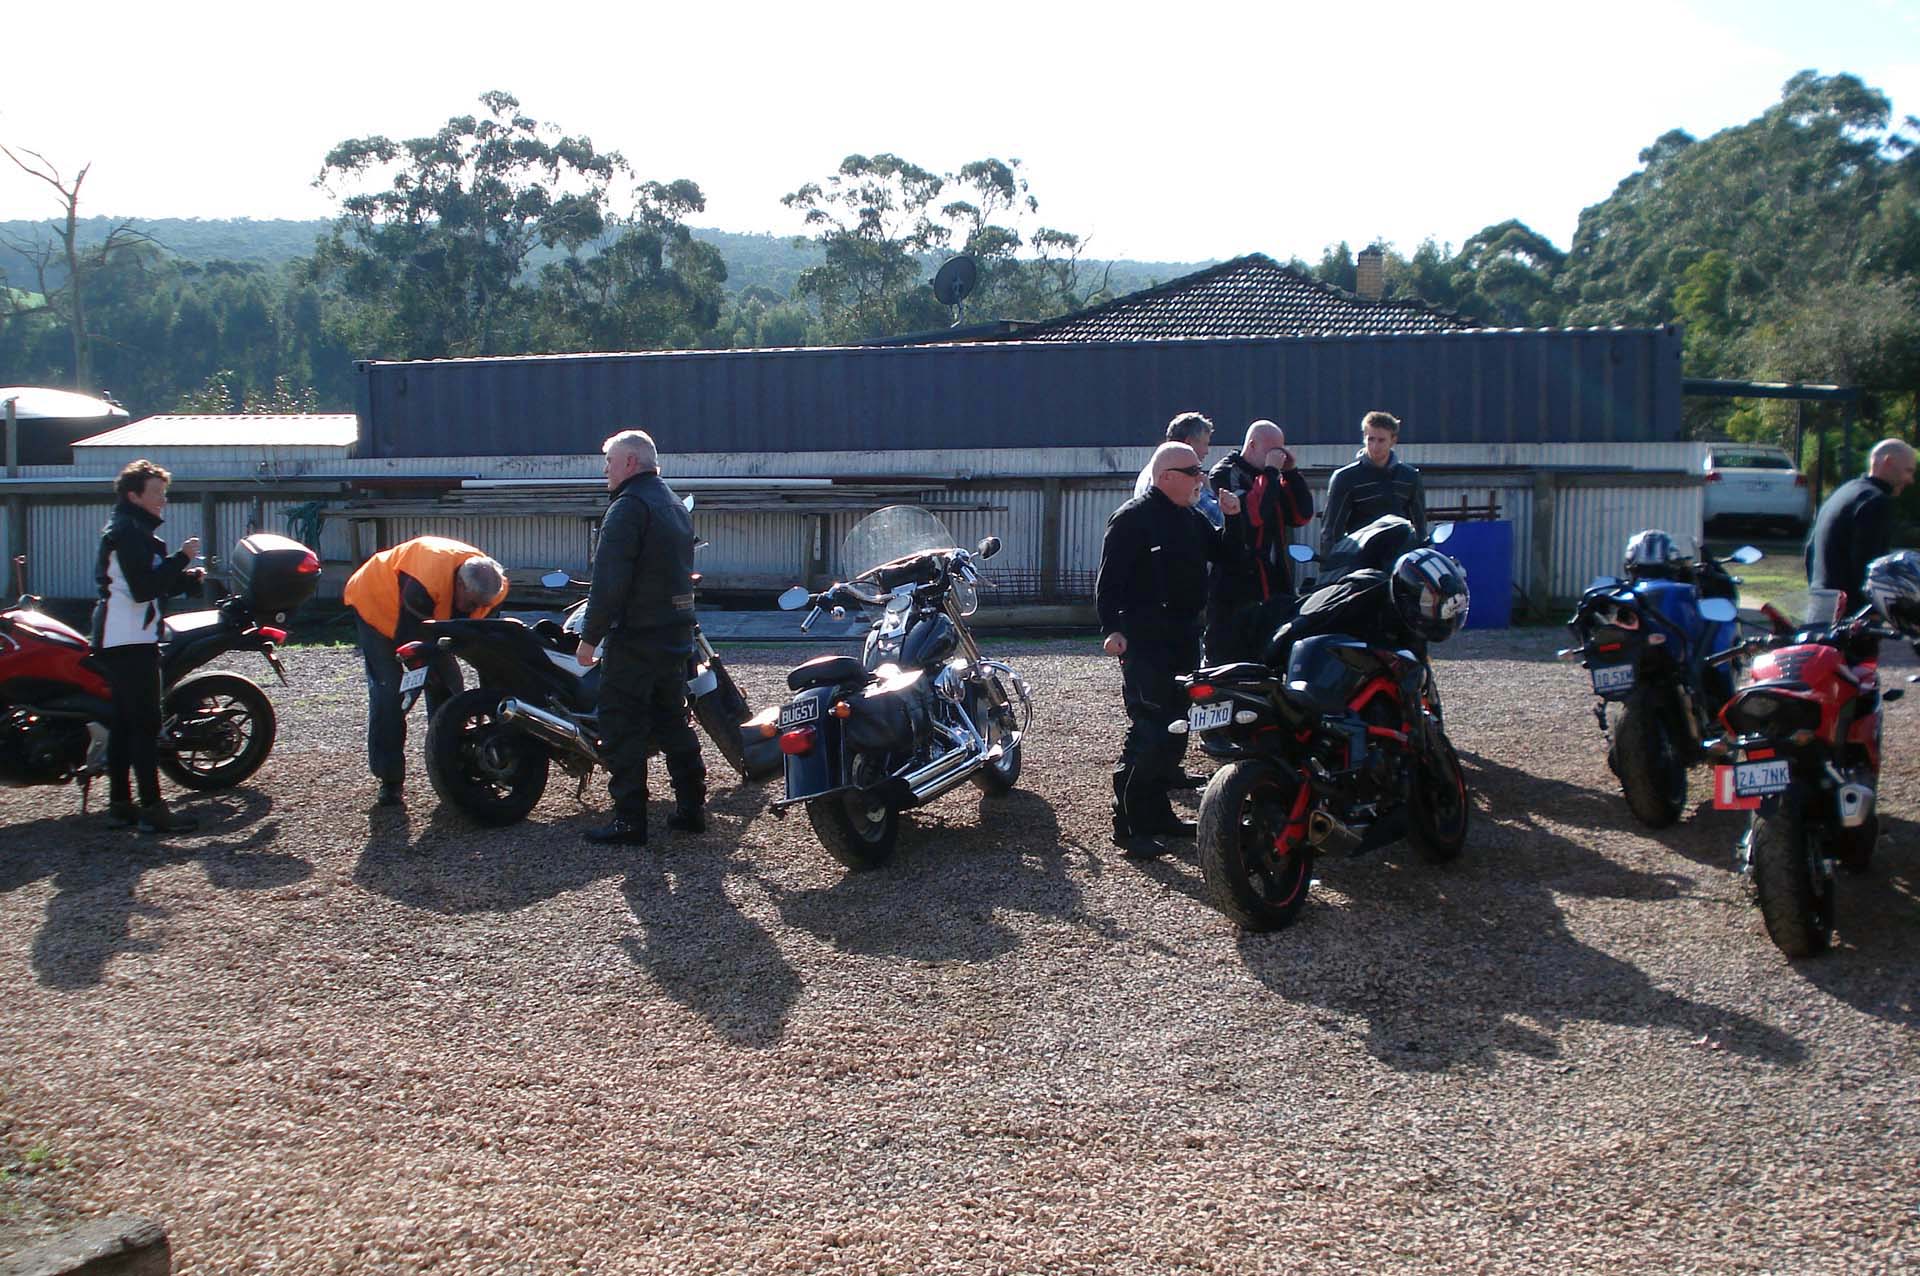 Dairylicious Farm Fudge - Motorcycle Group 1